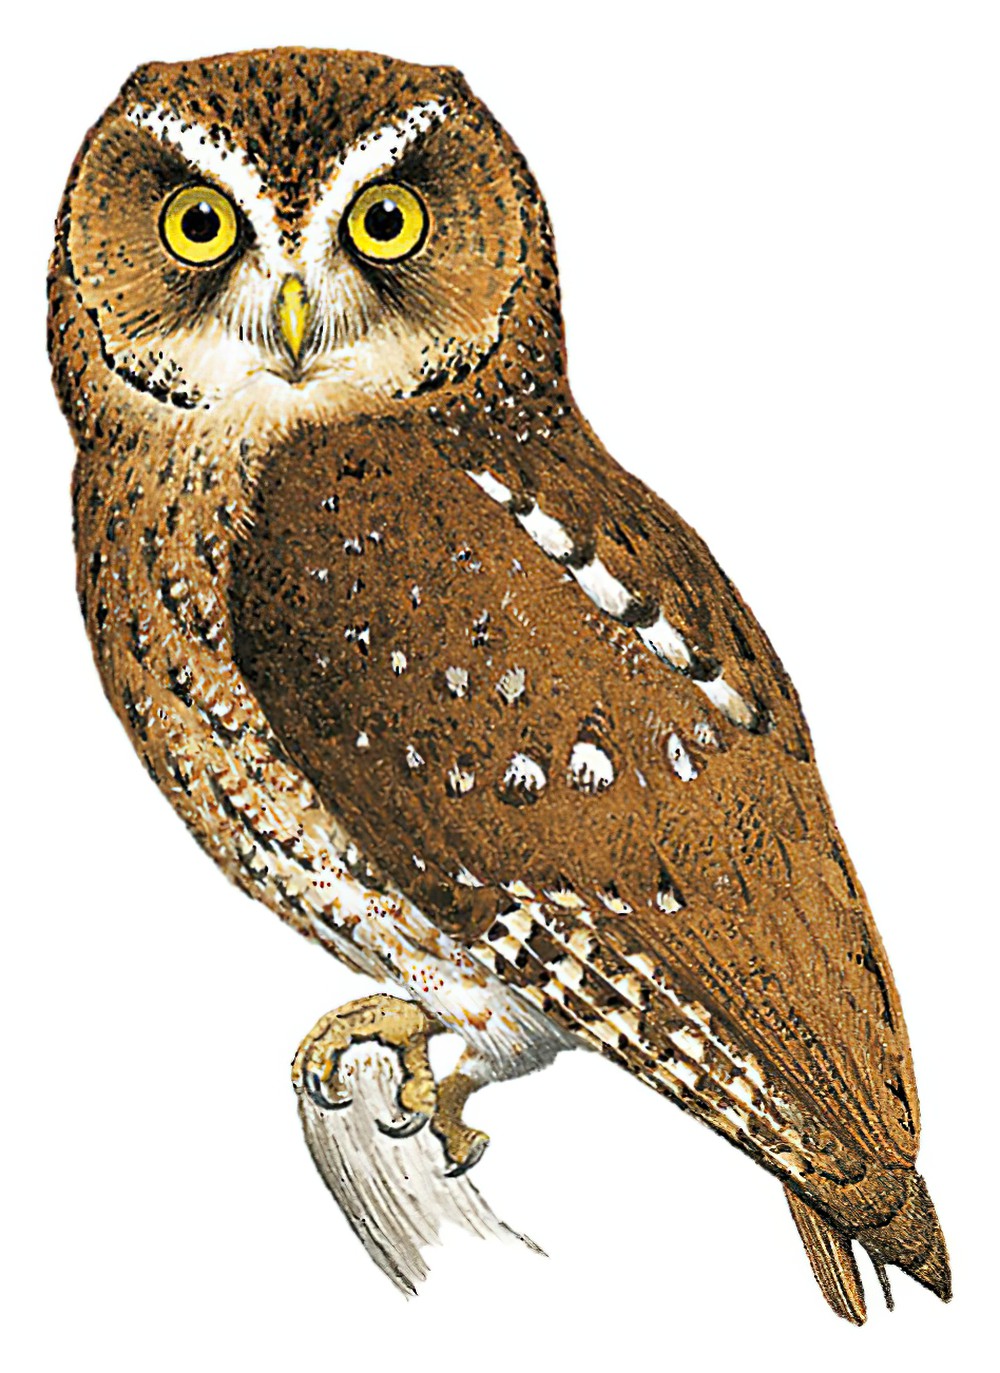 Sao Tome Scops-Owl / Otus hartlaubi